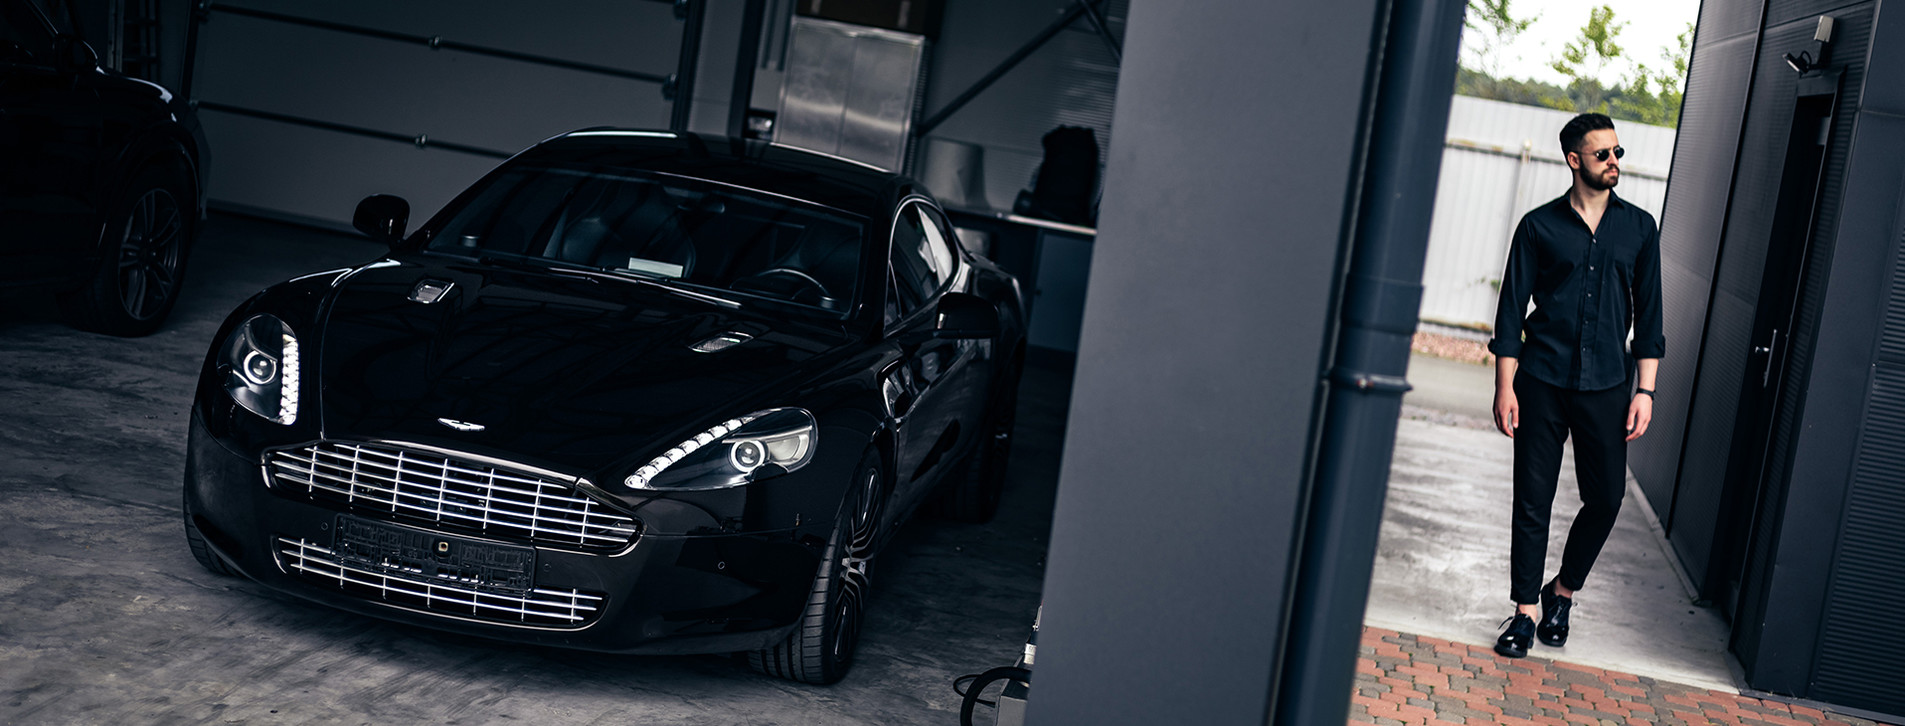 Фото 1 - Тест-драйв Aston Martin